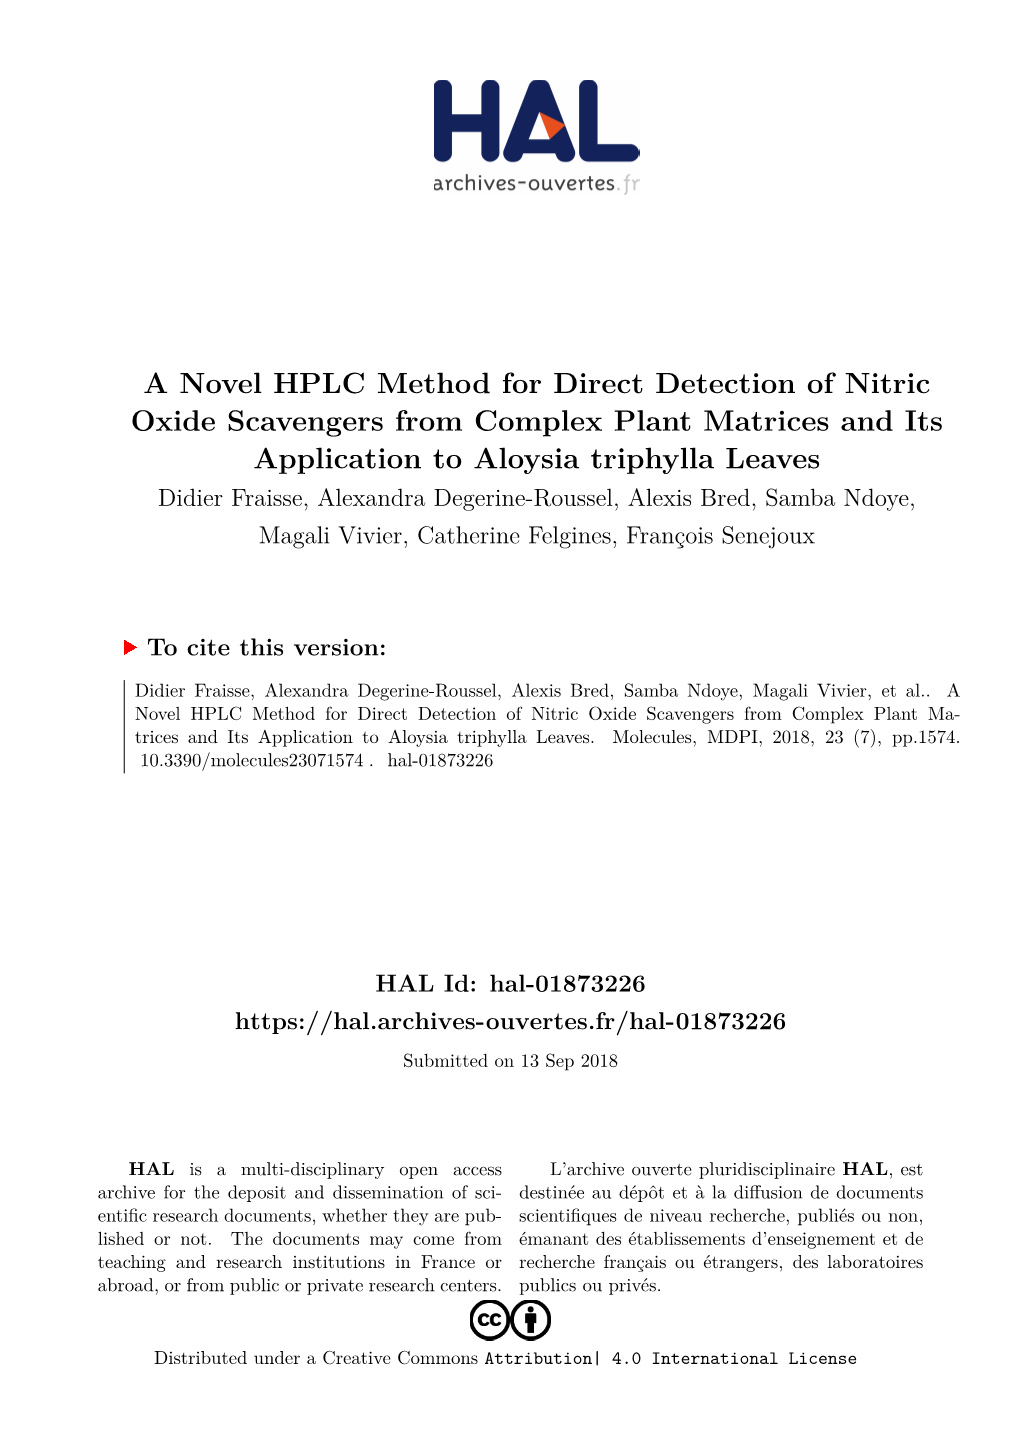 A Novel HPLC Method for Direct Detection of Nitric Oxide